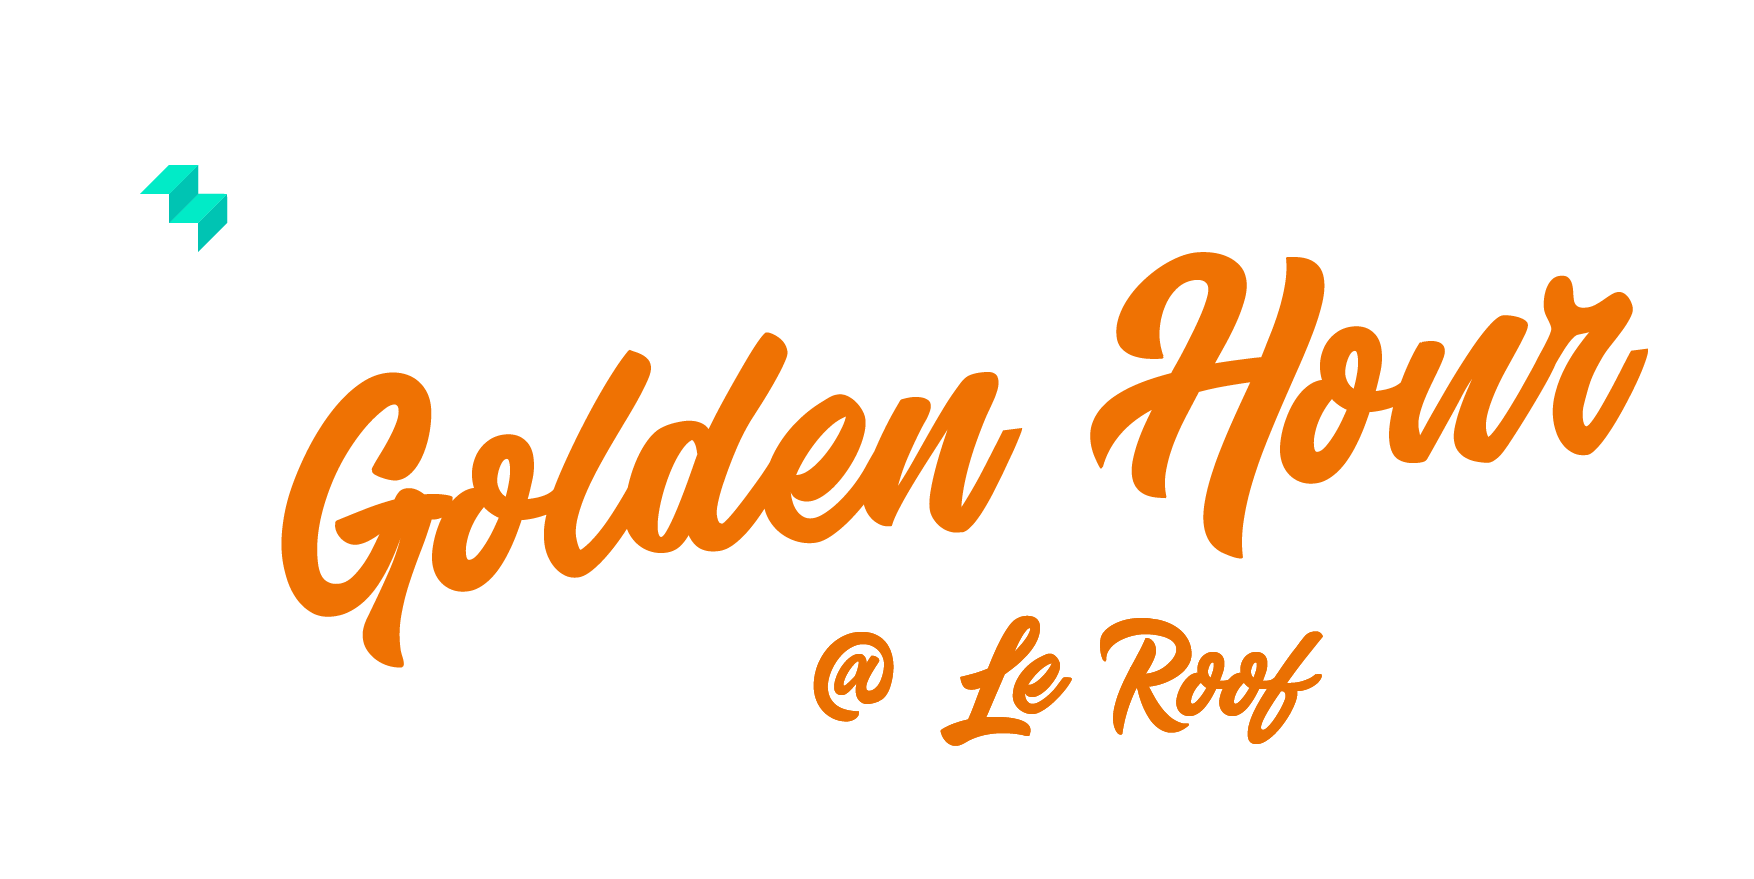 Golden-hour-logo-with-sponsors